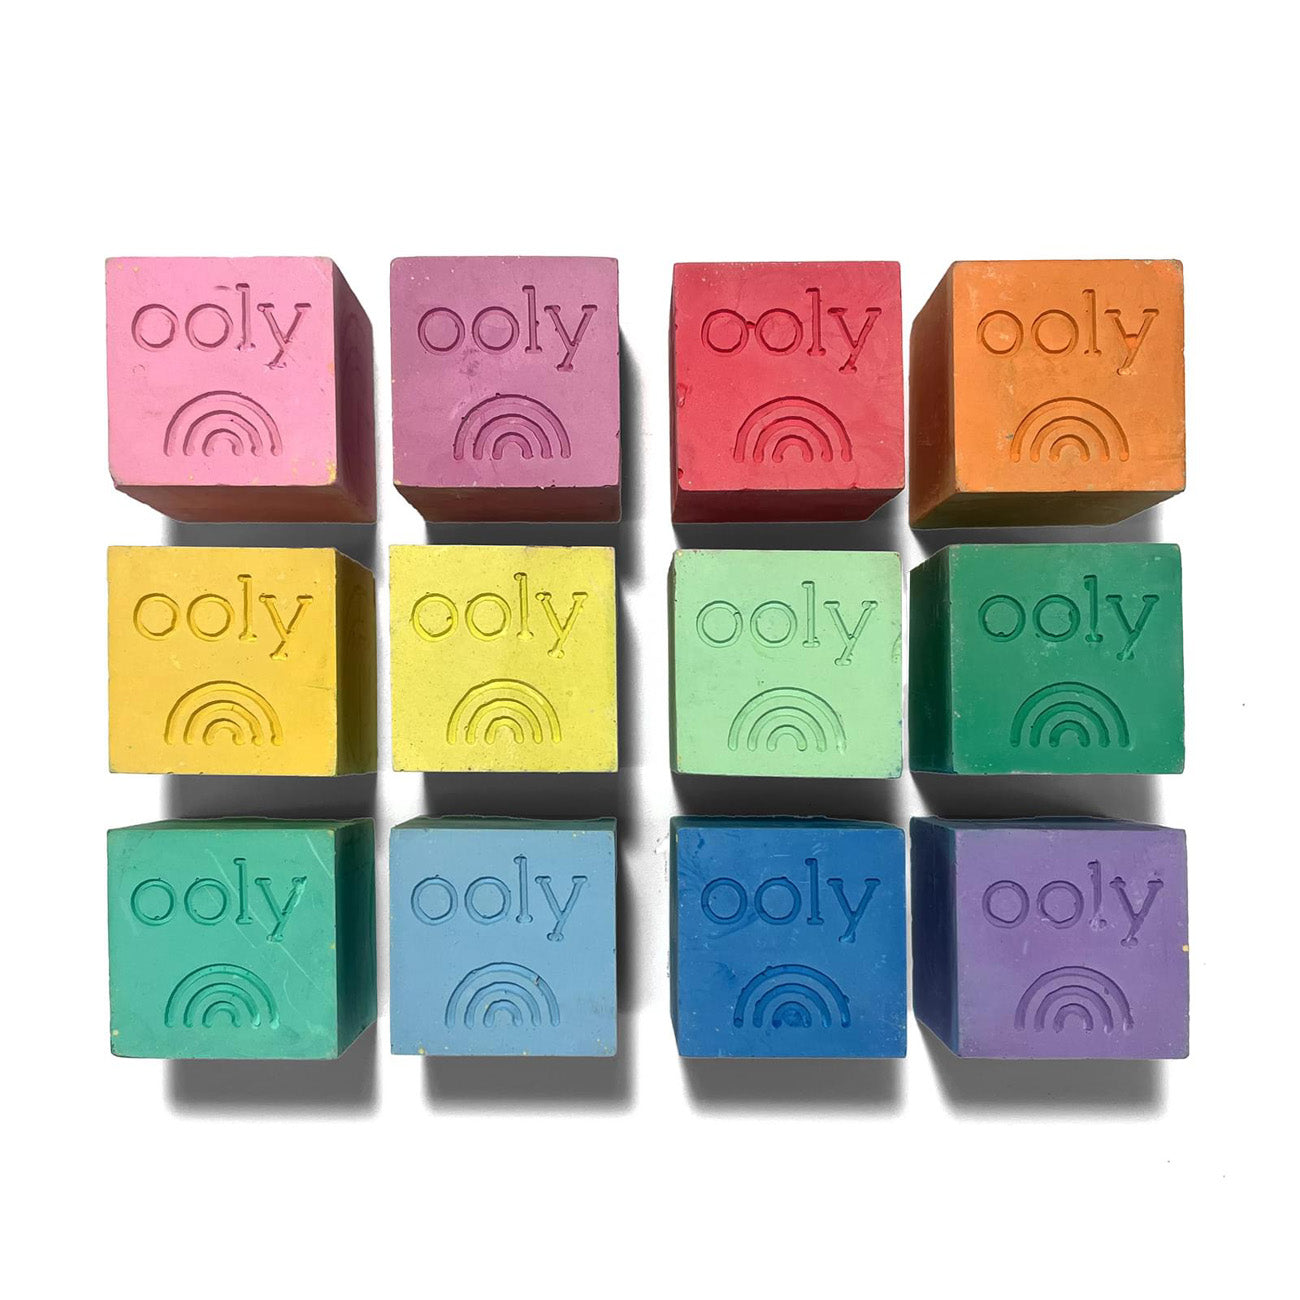 Ooly Chalk-O-Rama Block-Gehwegkreide (12er-Set)